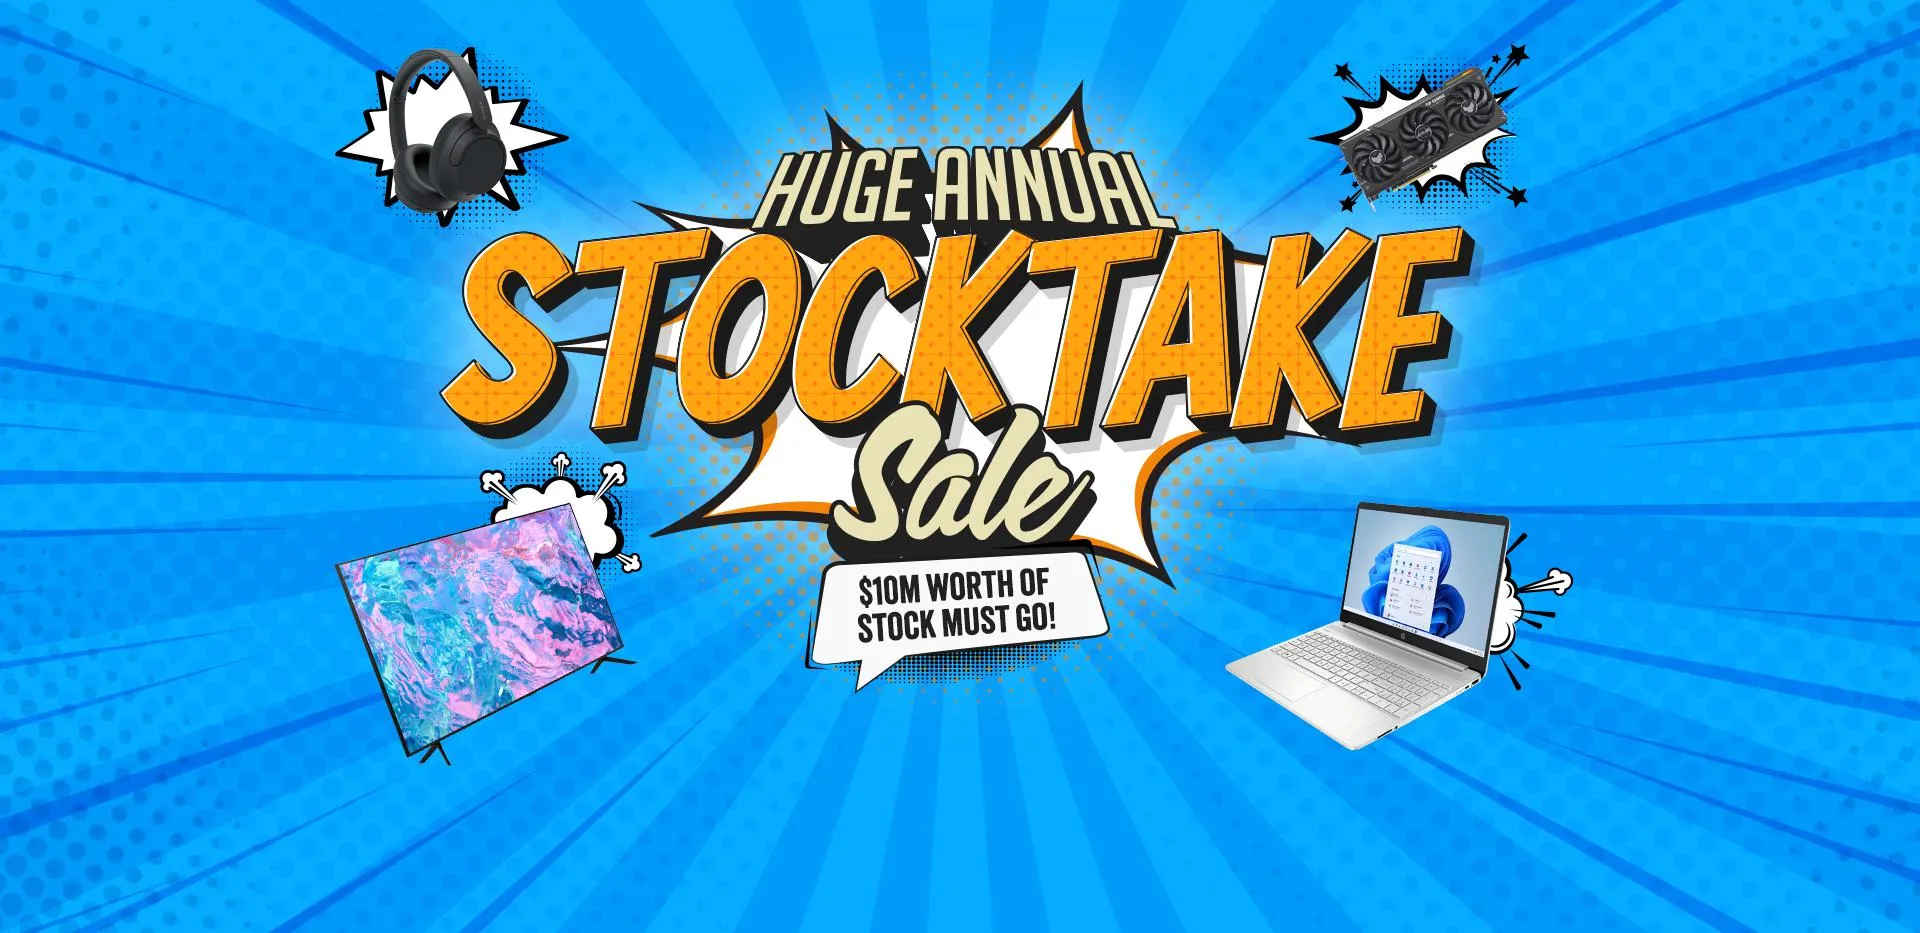 Huge Annual Stocktake Sale